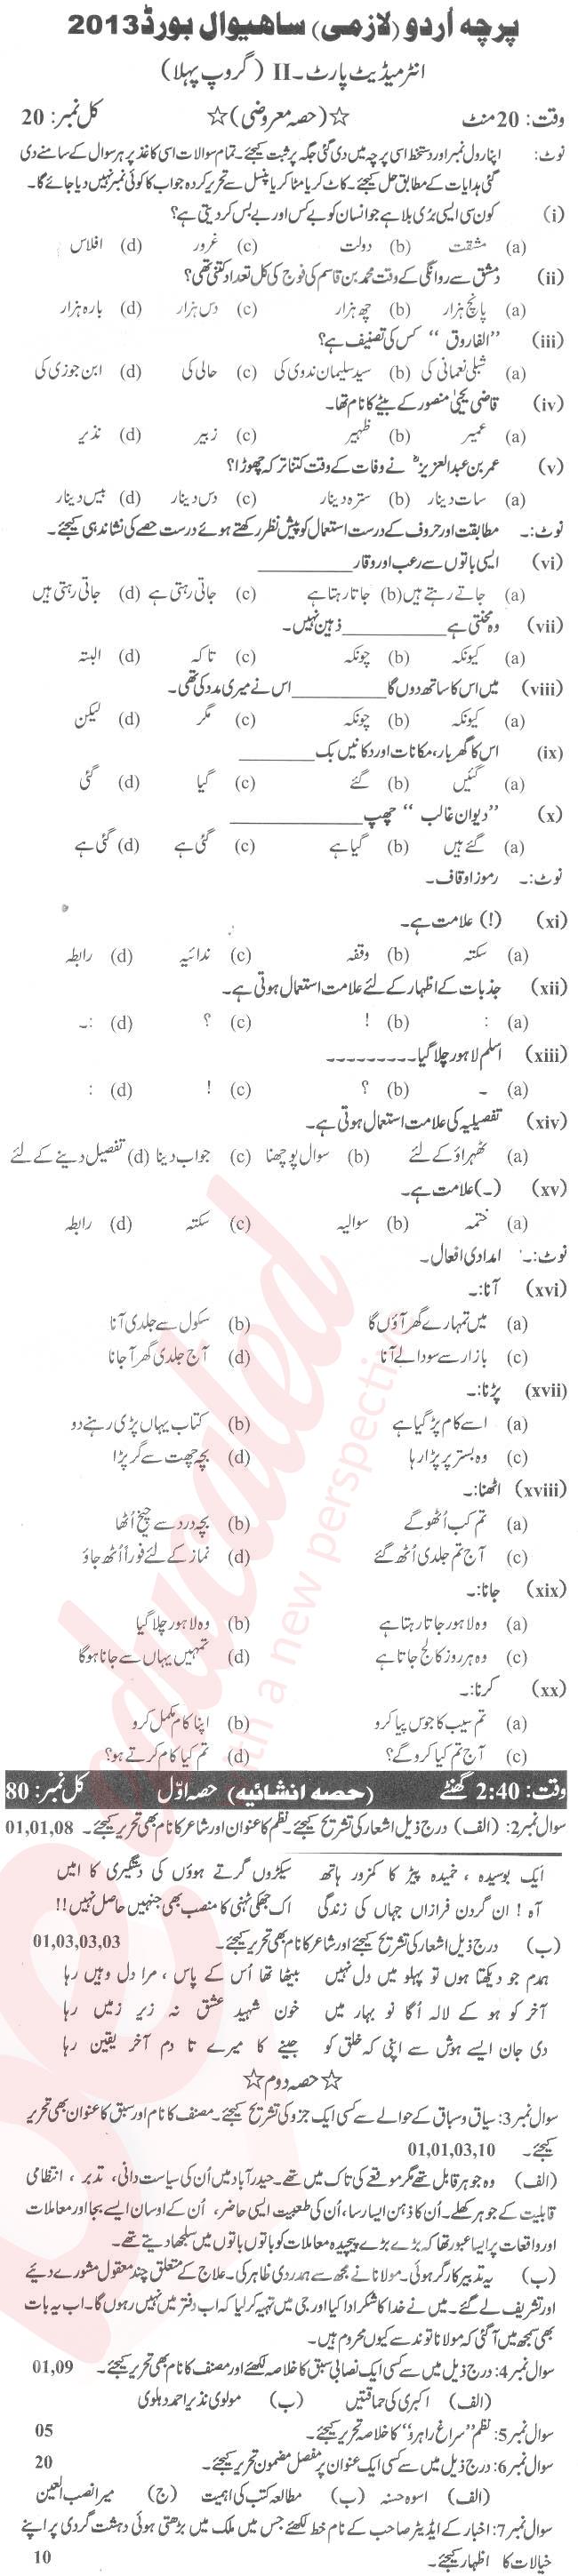 Urdu 12th class Past Paper Group 1 BISE Sahiwal 2013